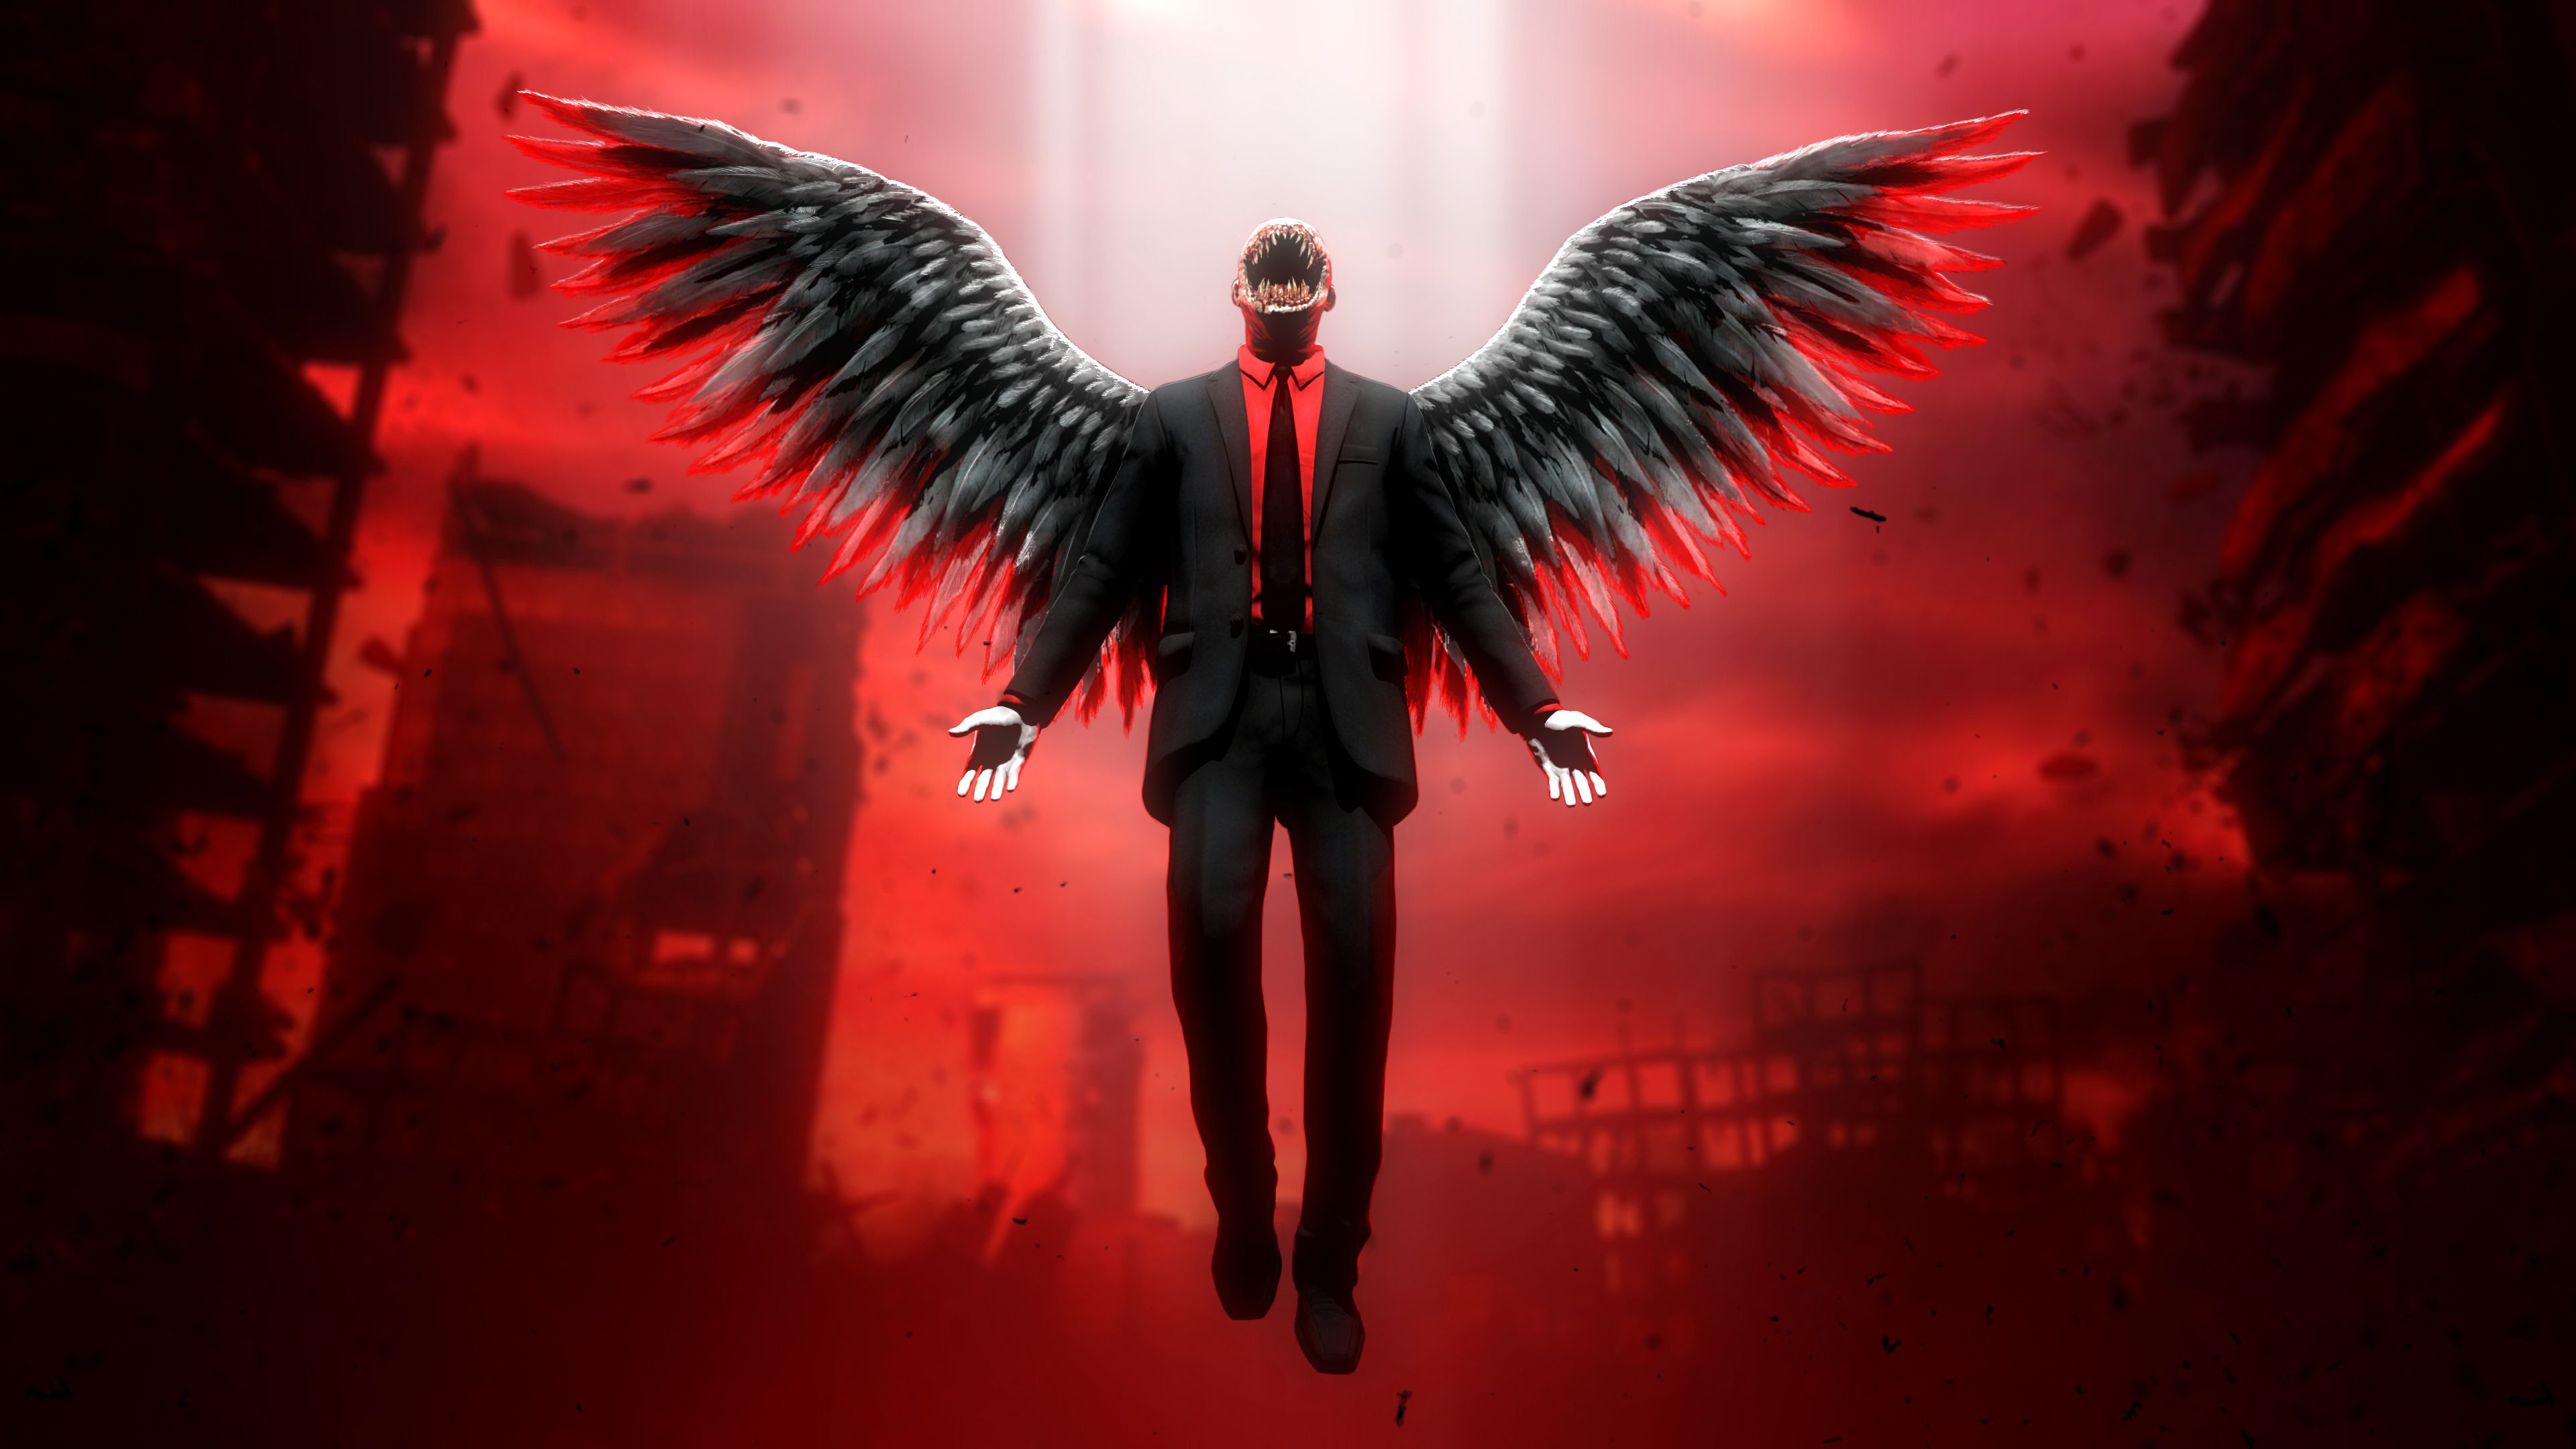 Devil wings 1080P, 2K, 4K, 5K HD wallpapers free download